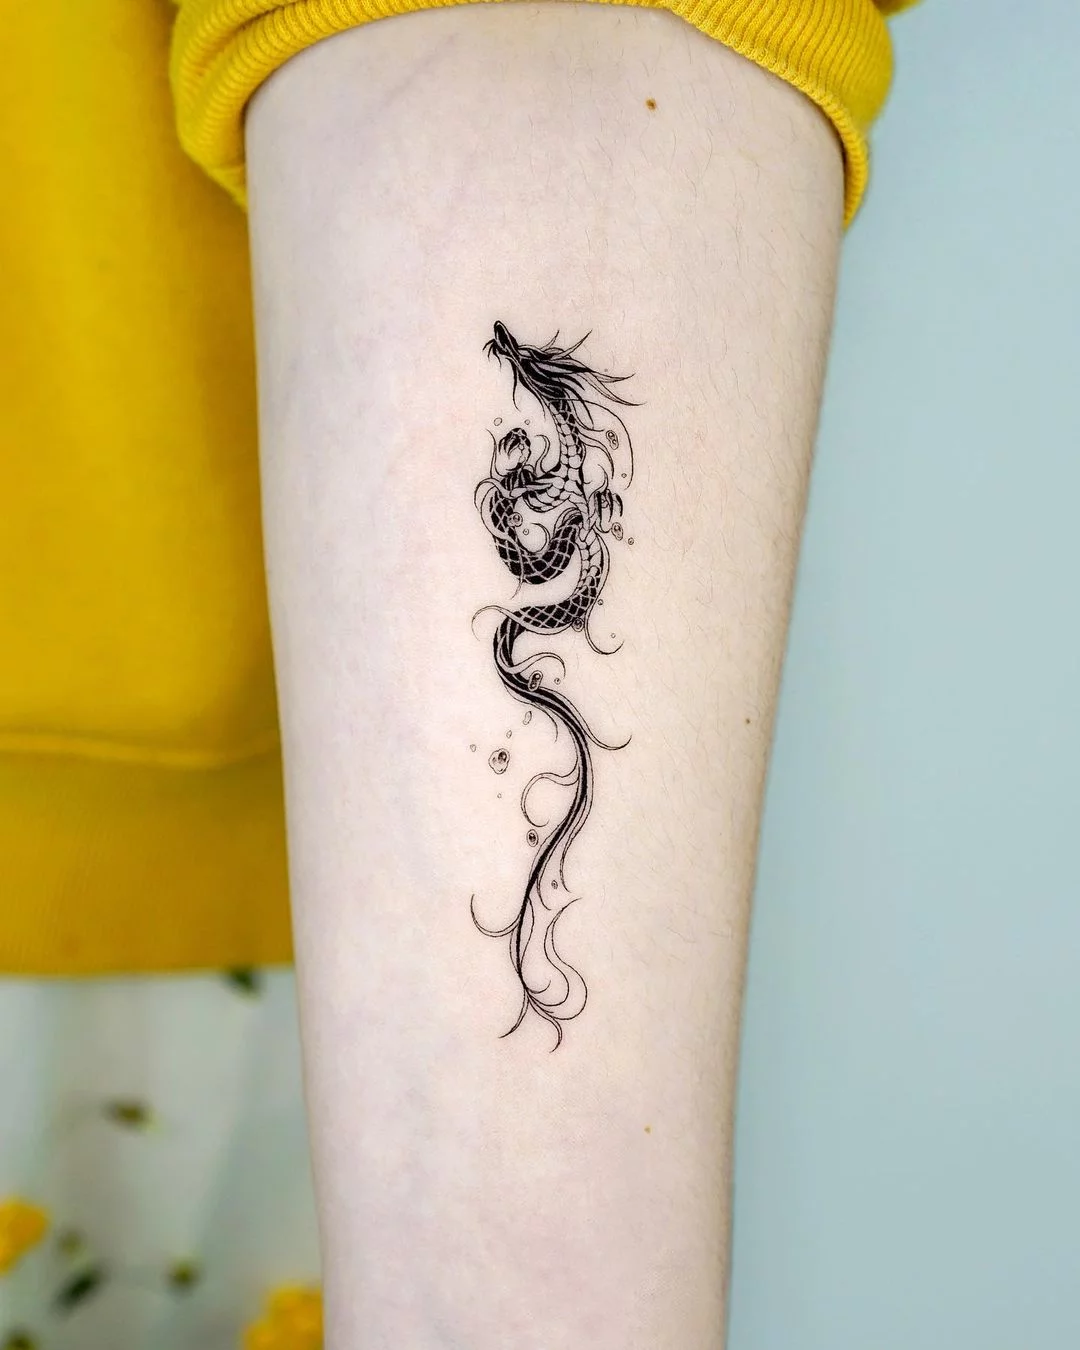 Enchanting Easy Small Dragon Tattoo  Small Dragon Tattoos  Small Tattoos   MomCanvas